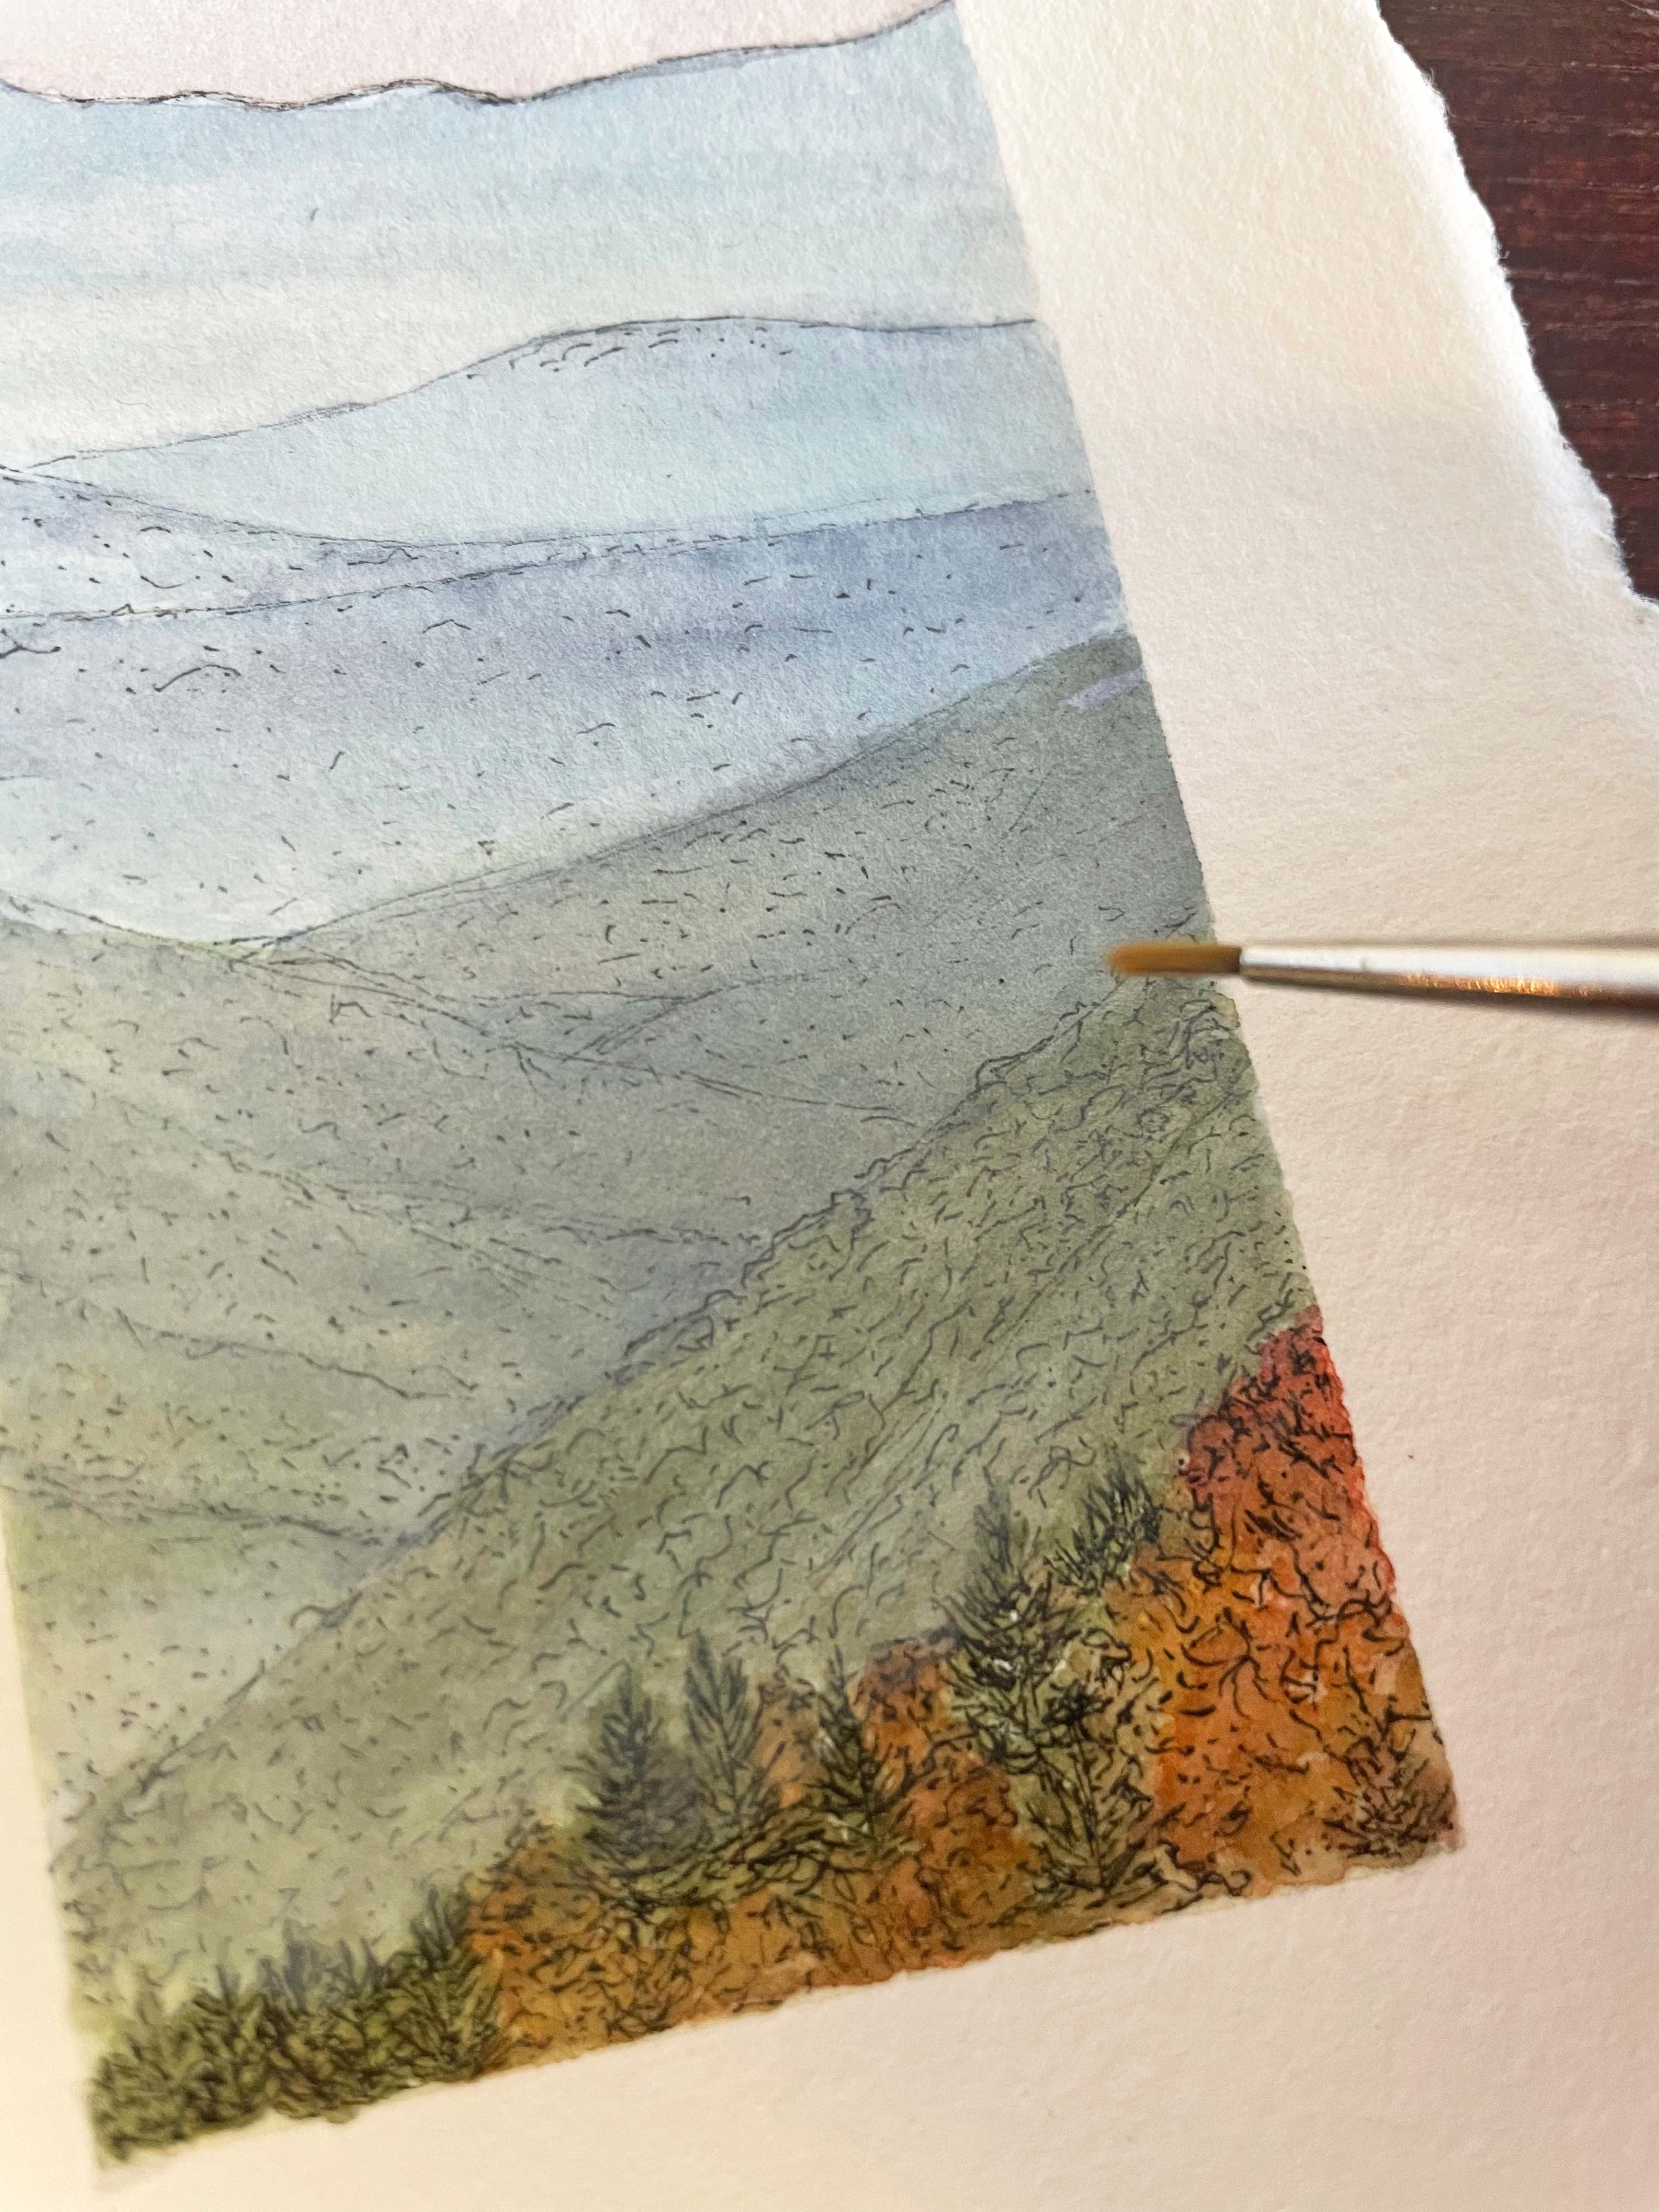 Great Smoky Mountains National Park Mini Watercolor Original